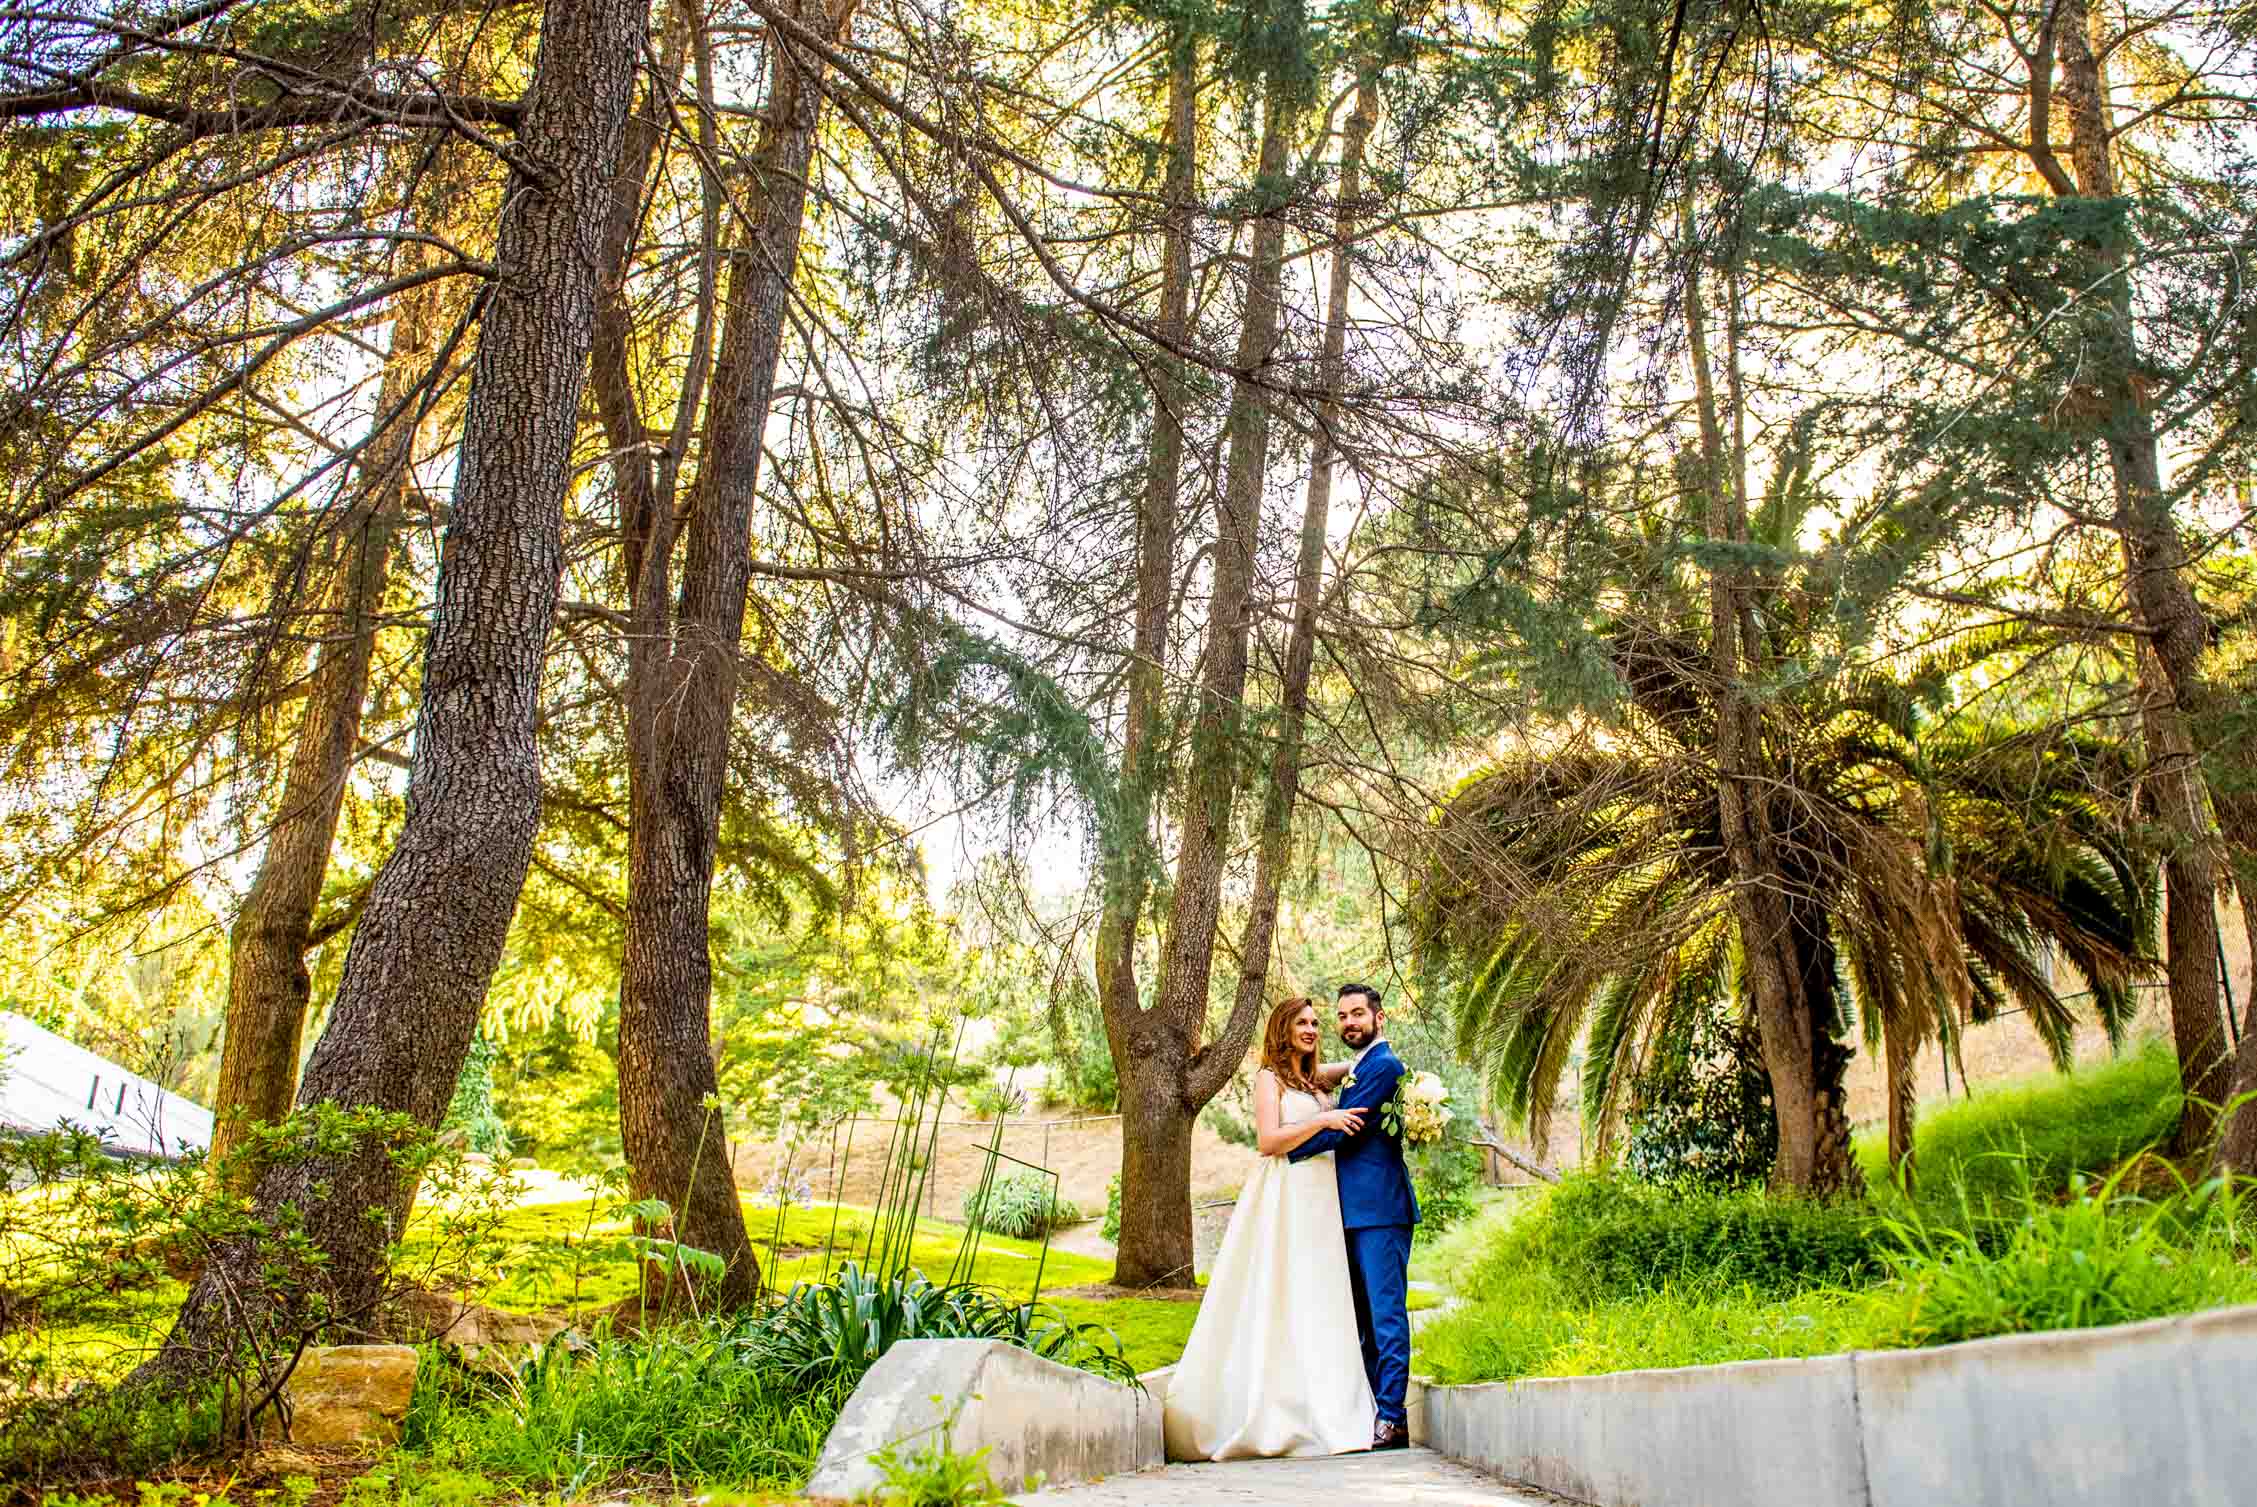 Wedding couple standing amongst lush palm trees